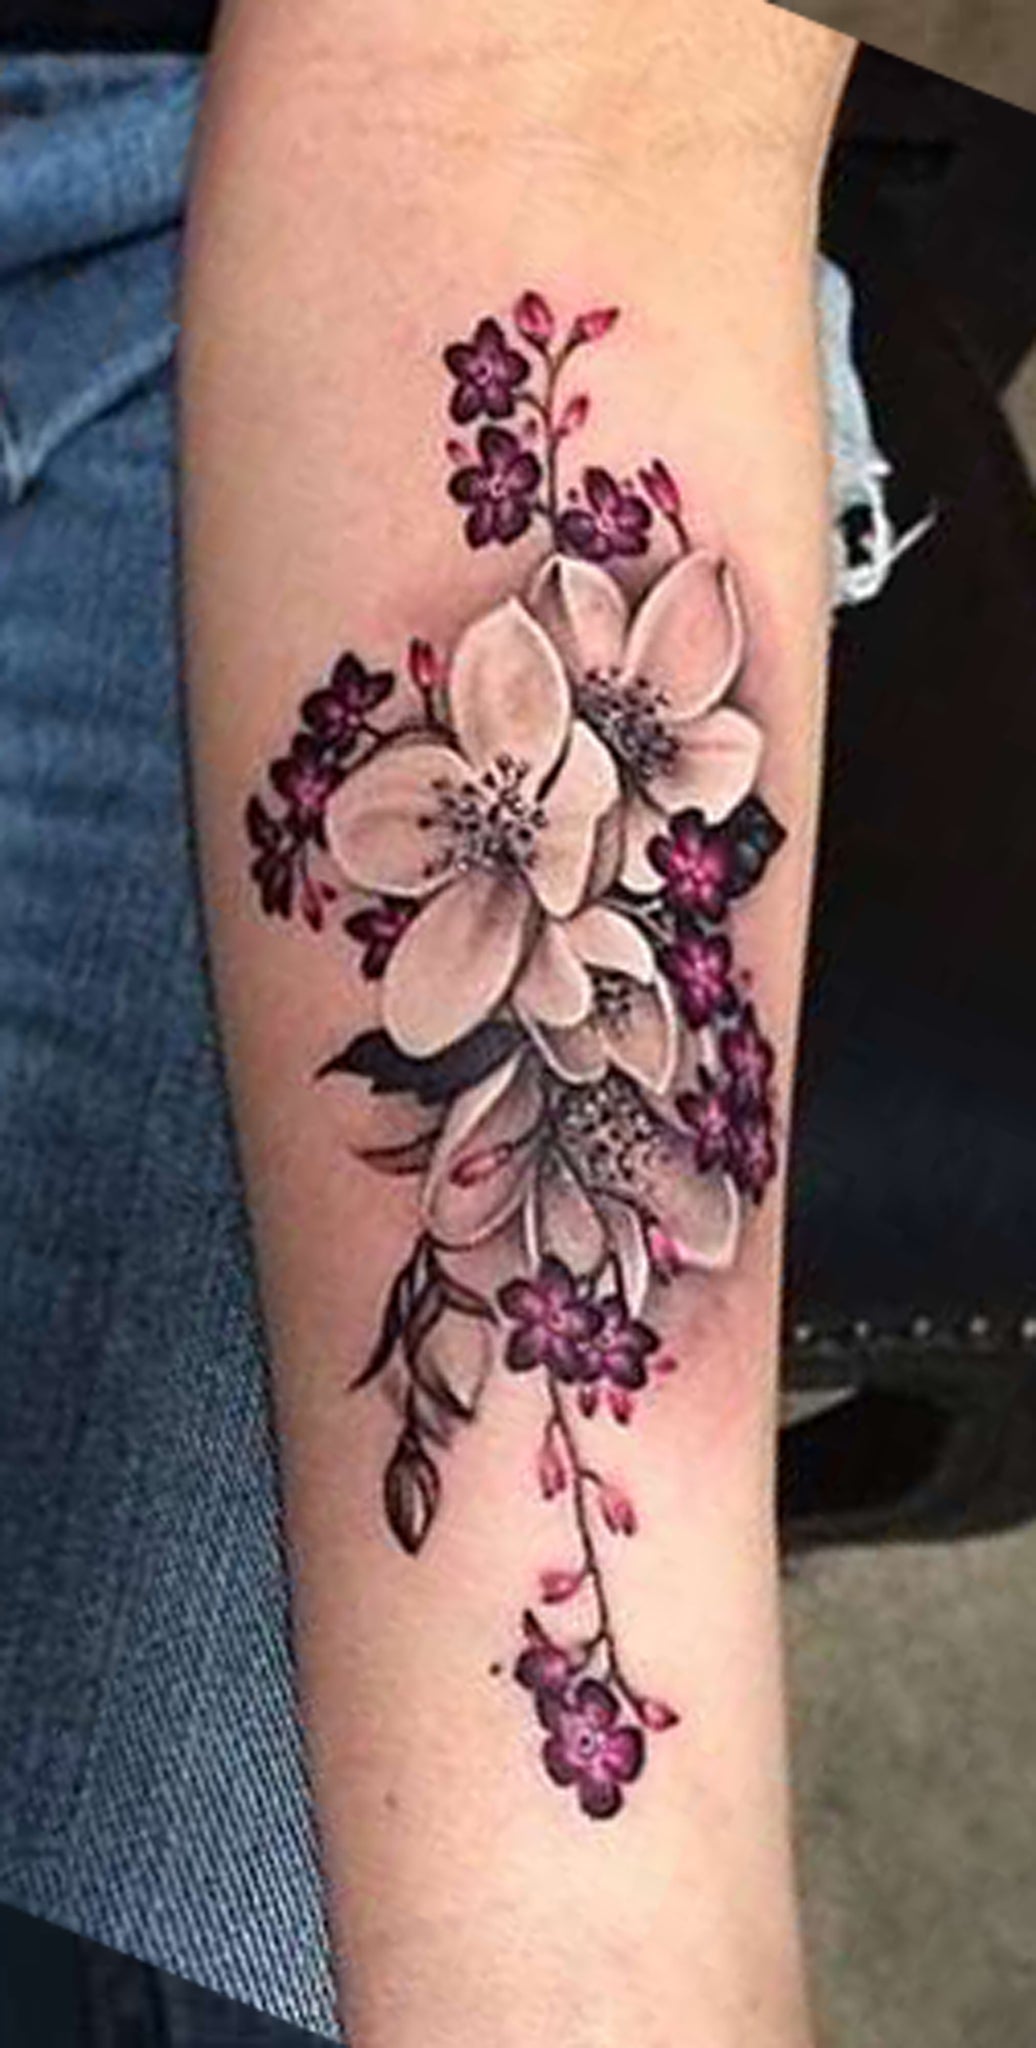 Colorful Tropical Flower Forearm Tattoo Ideas for Women - Traditional Wild Floral Arm Tat - www.MyBodiArt.com